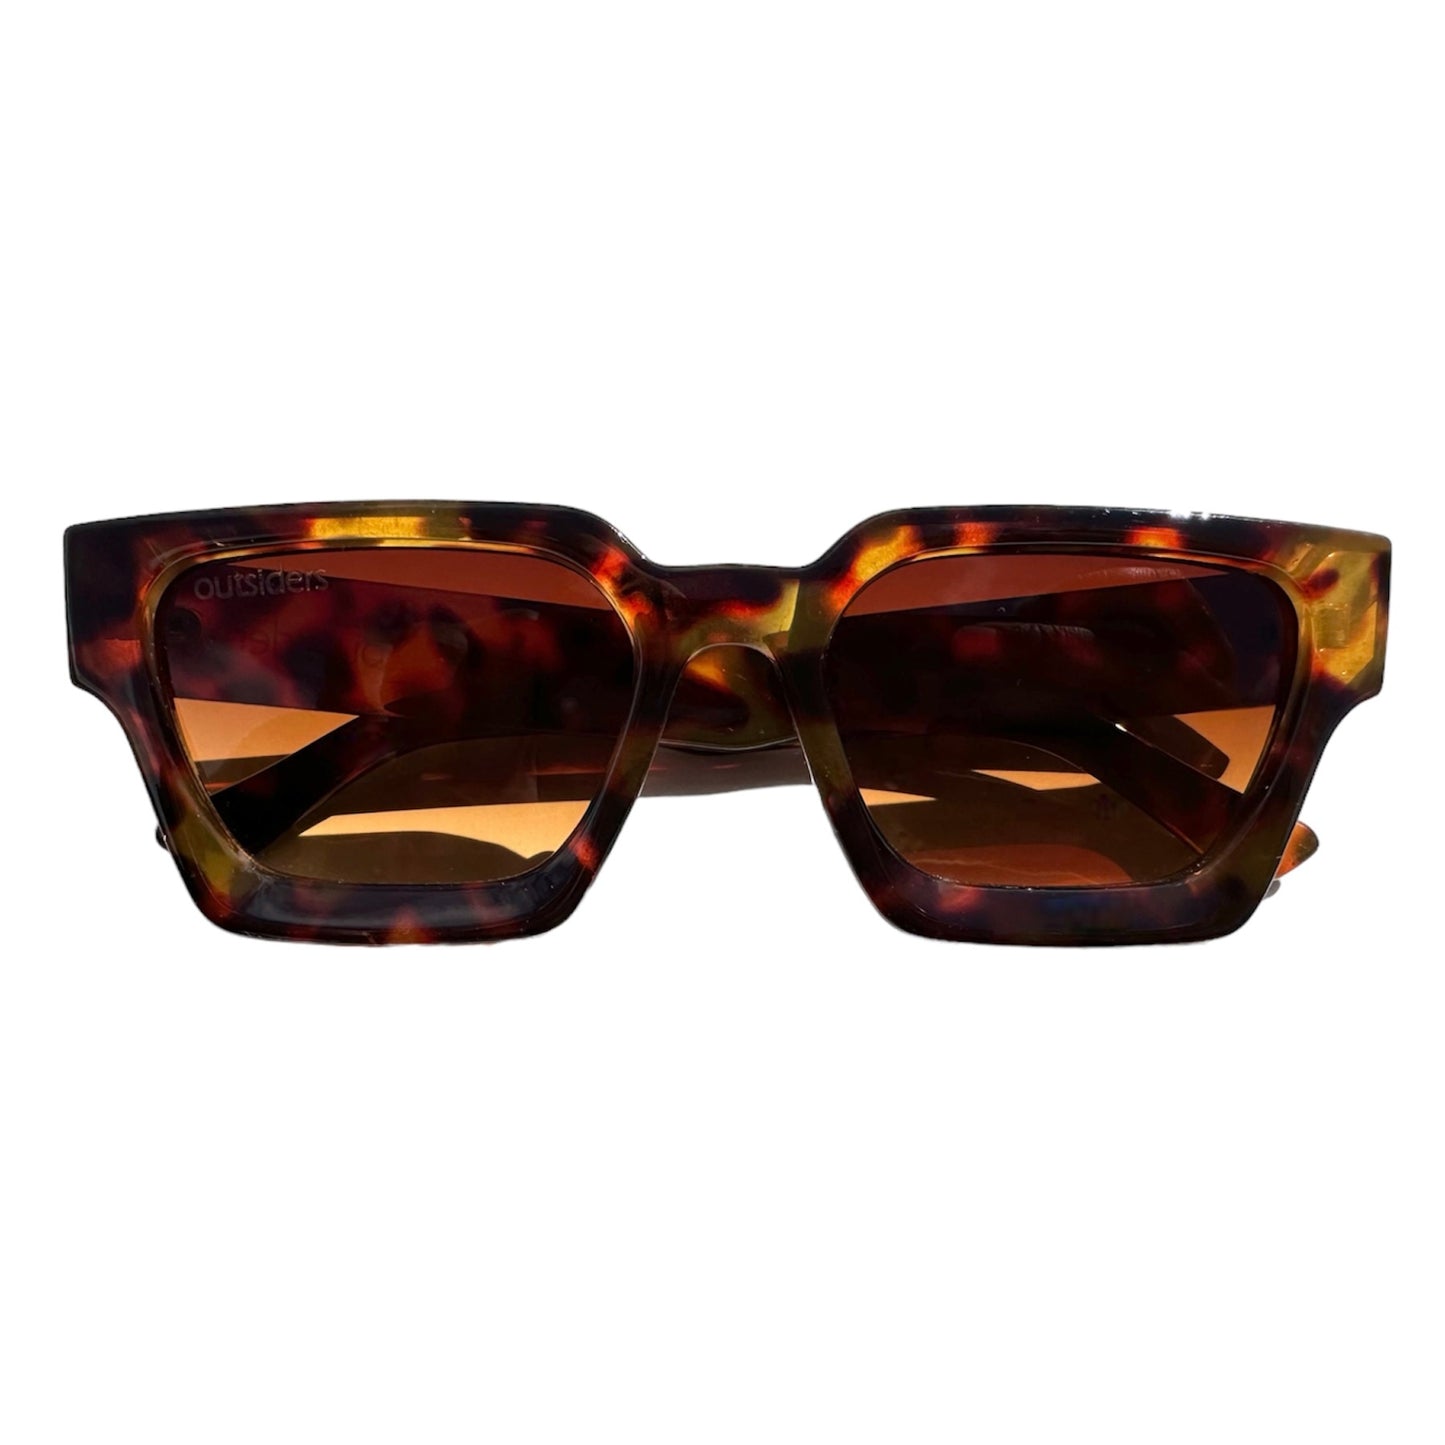 Outsiders Waved Sunglasses - Toritoise Shell